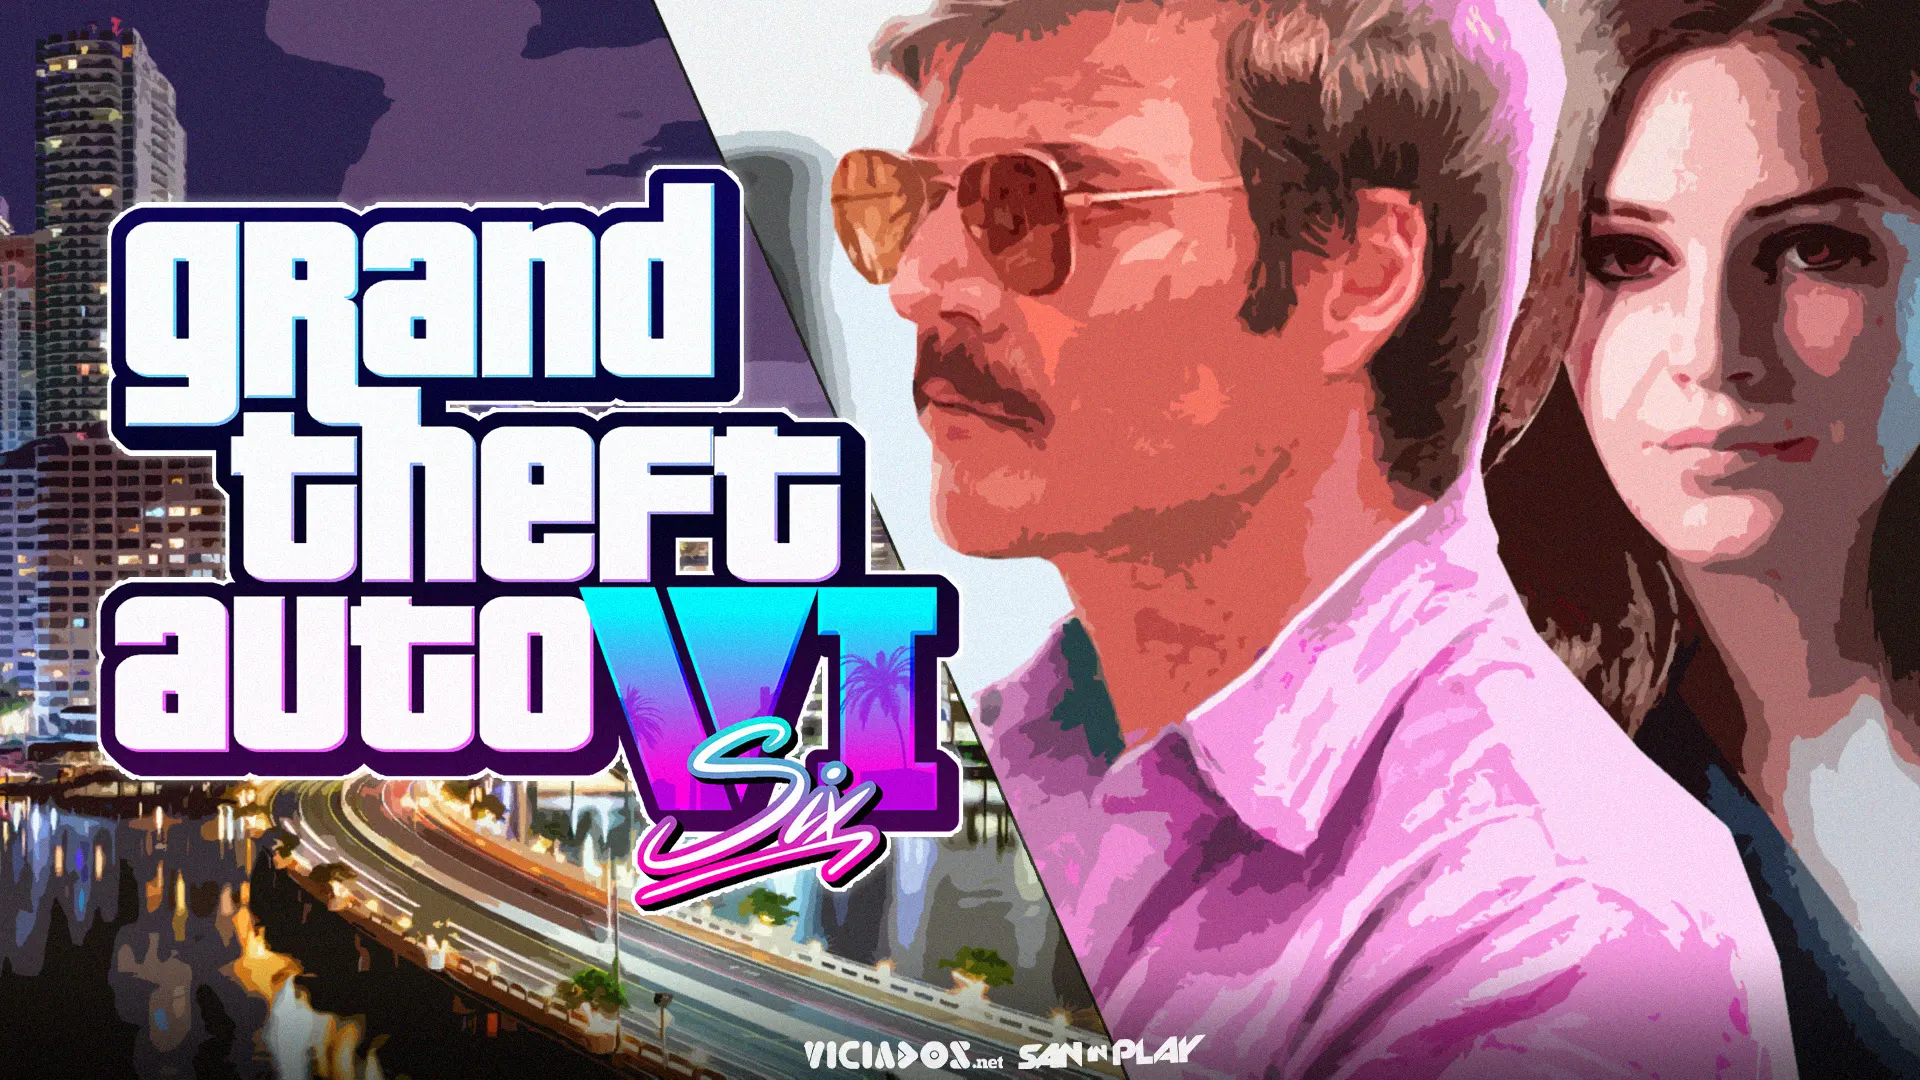 GTA 6 | Rockstar Games coloca teaser a Grand Theft Auto VI no Instagram 2022 Viciados